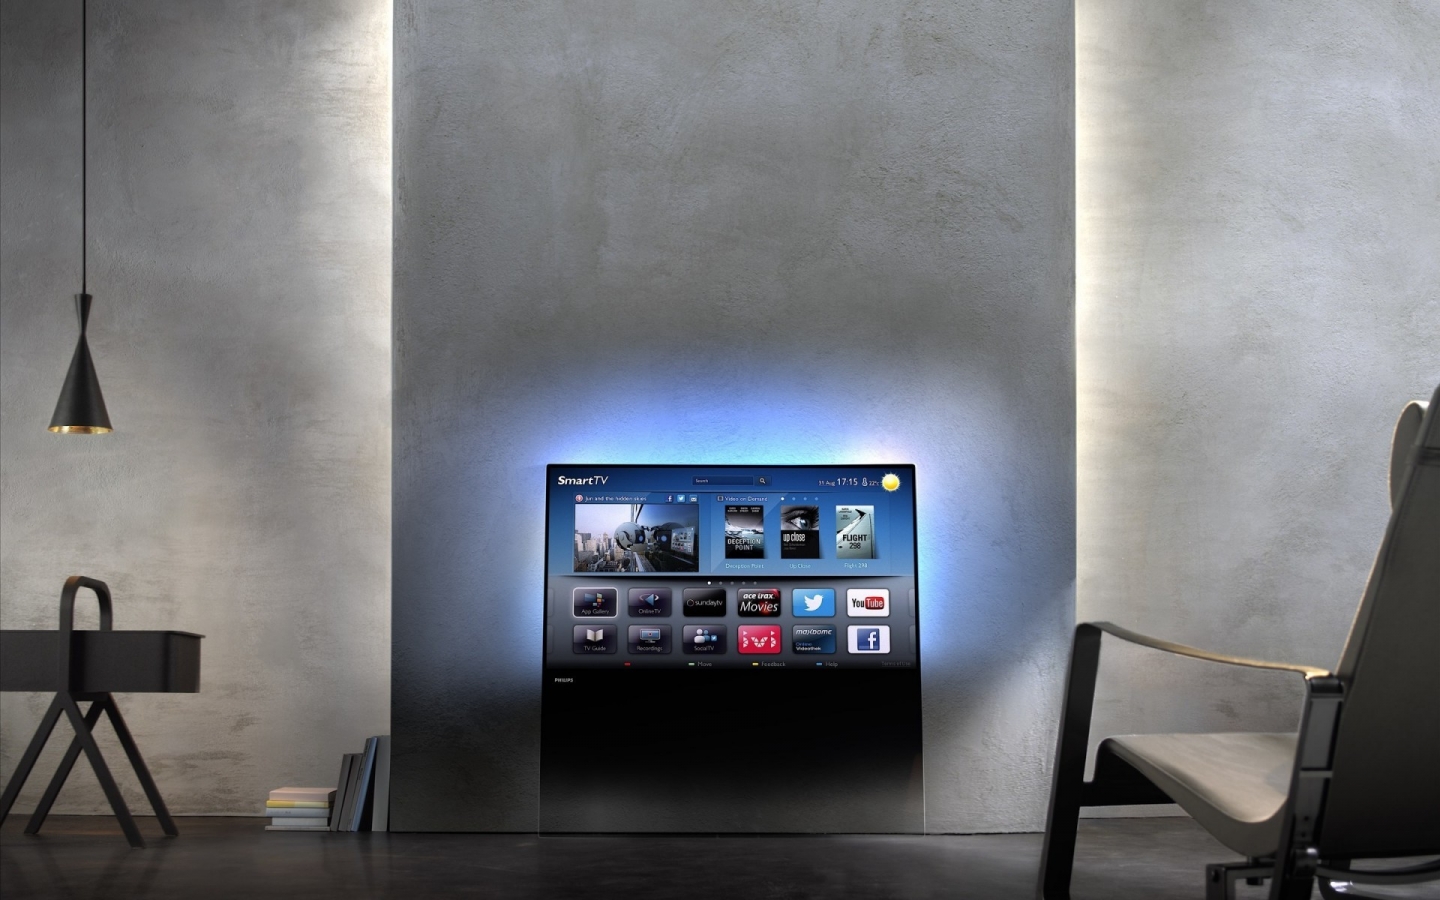 New Philips DesignLine TV for 1440 x 900 widescreen resolution